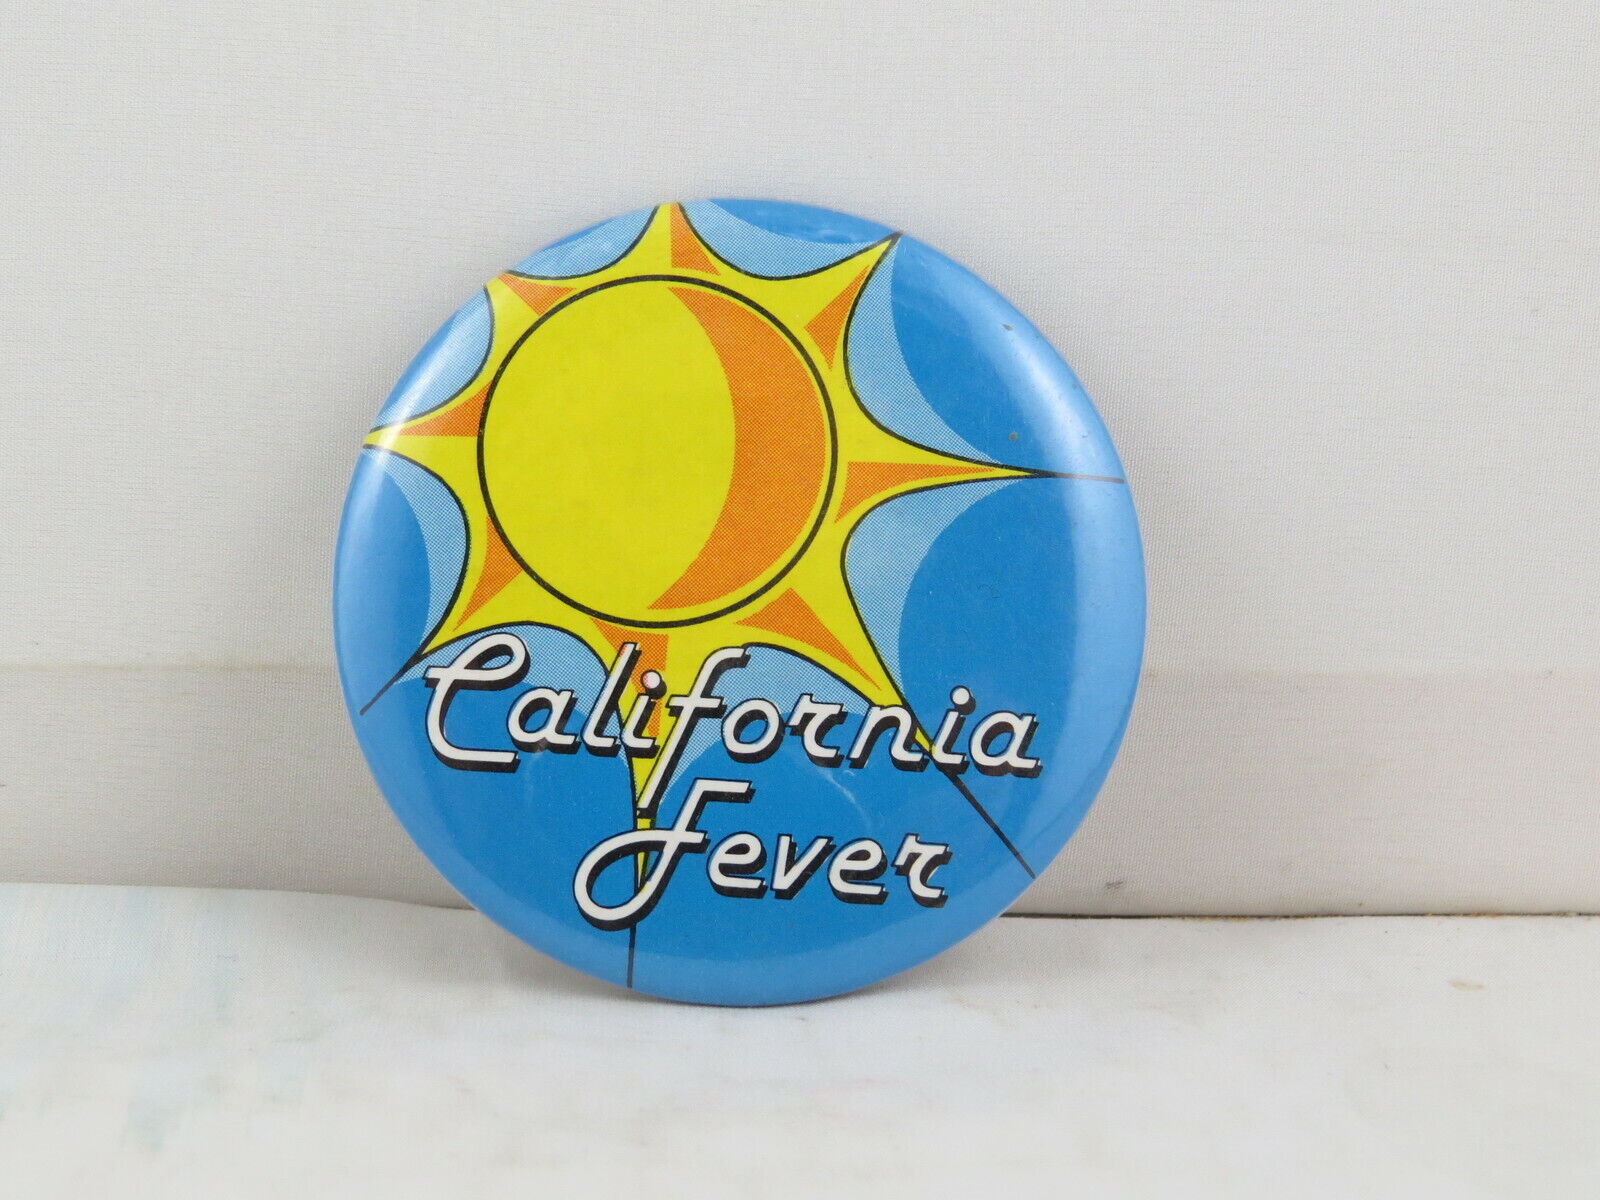 Vintage Tourist Pin - California Fever Sun Graphic - Celluloid Pin 